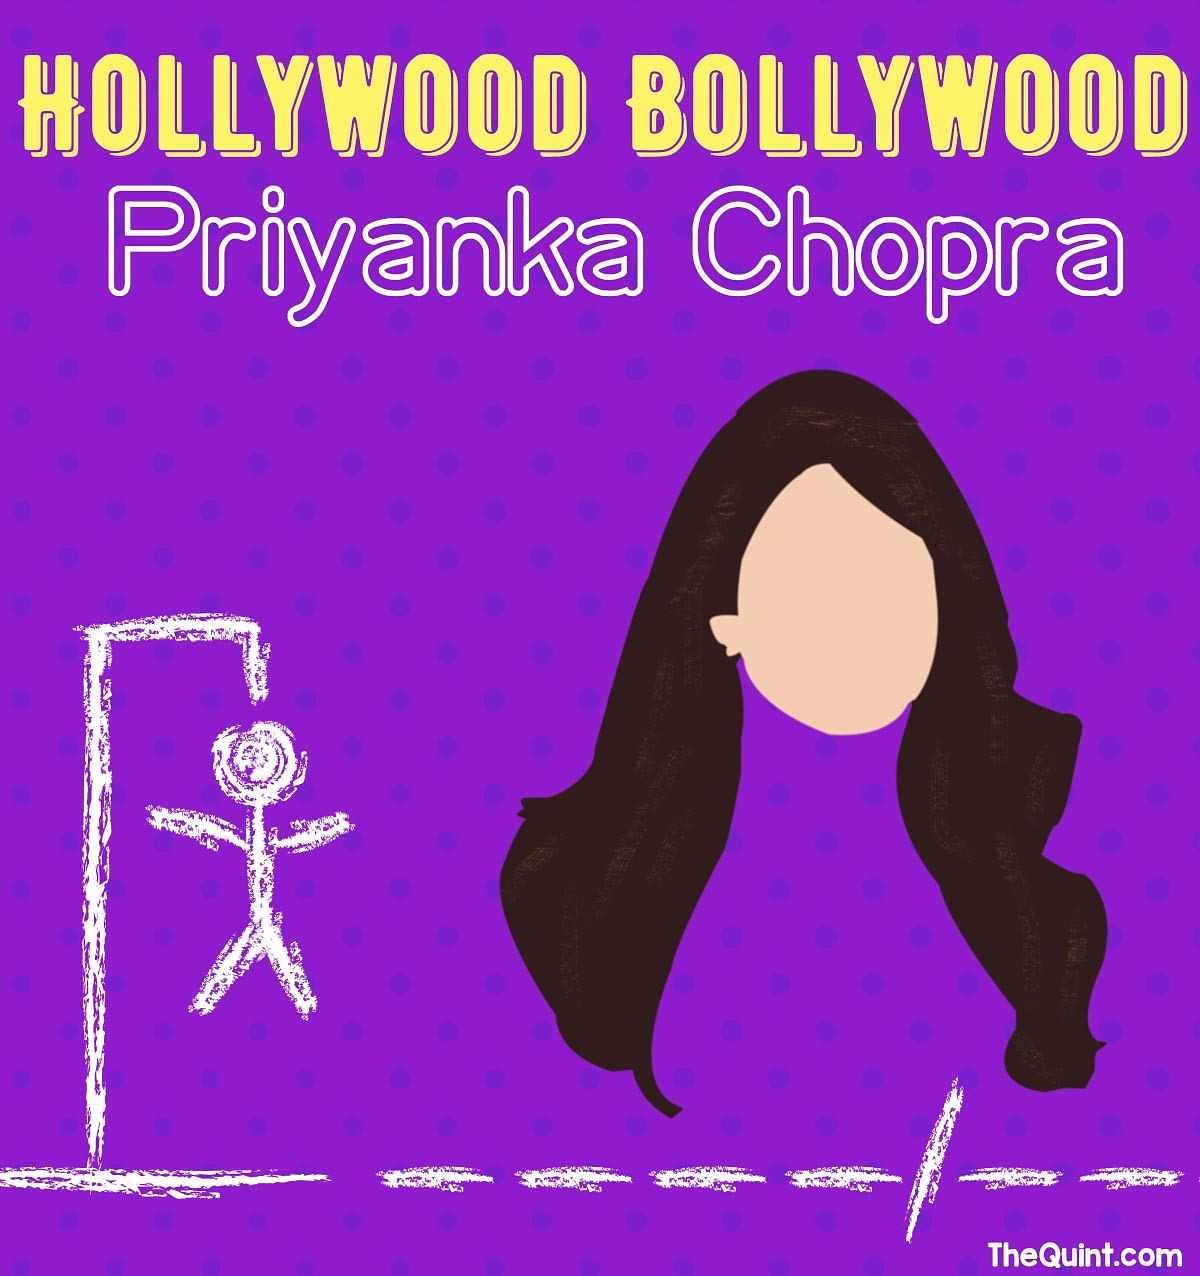 Ever wondered what Ranbir Kapoor and Priyanka Chopra must have played in school?